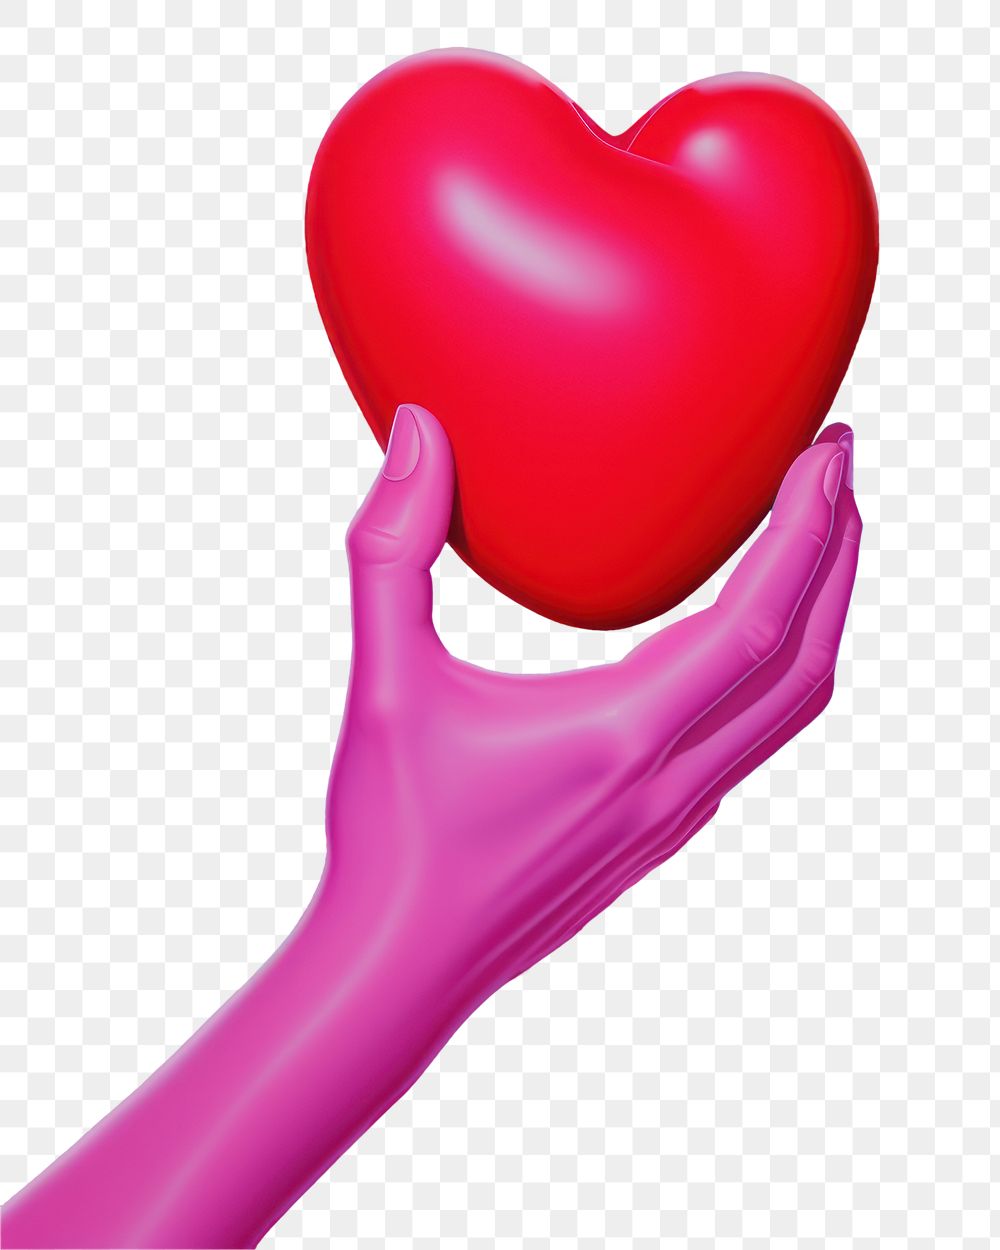 PNG Hand holding heart balloon symbol love heart symbol.